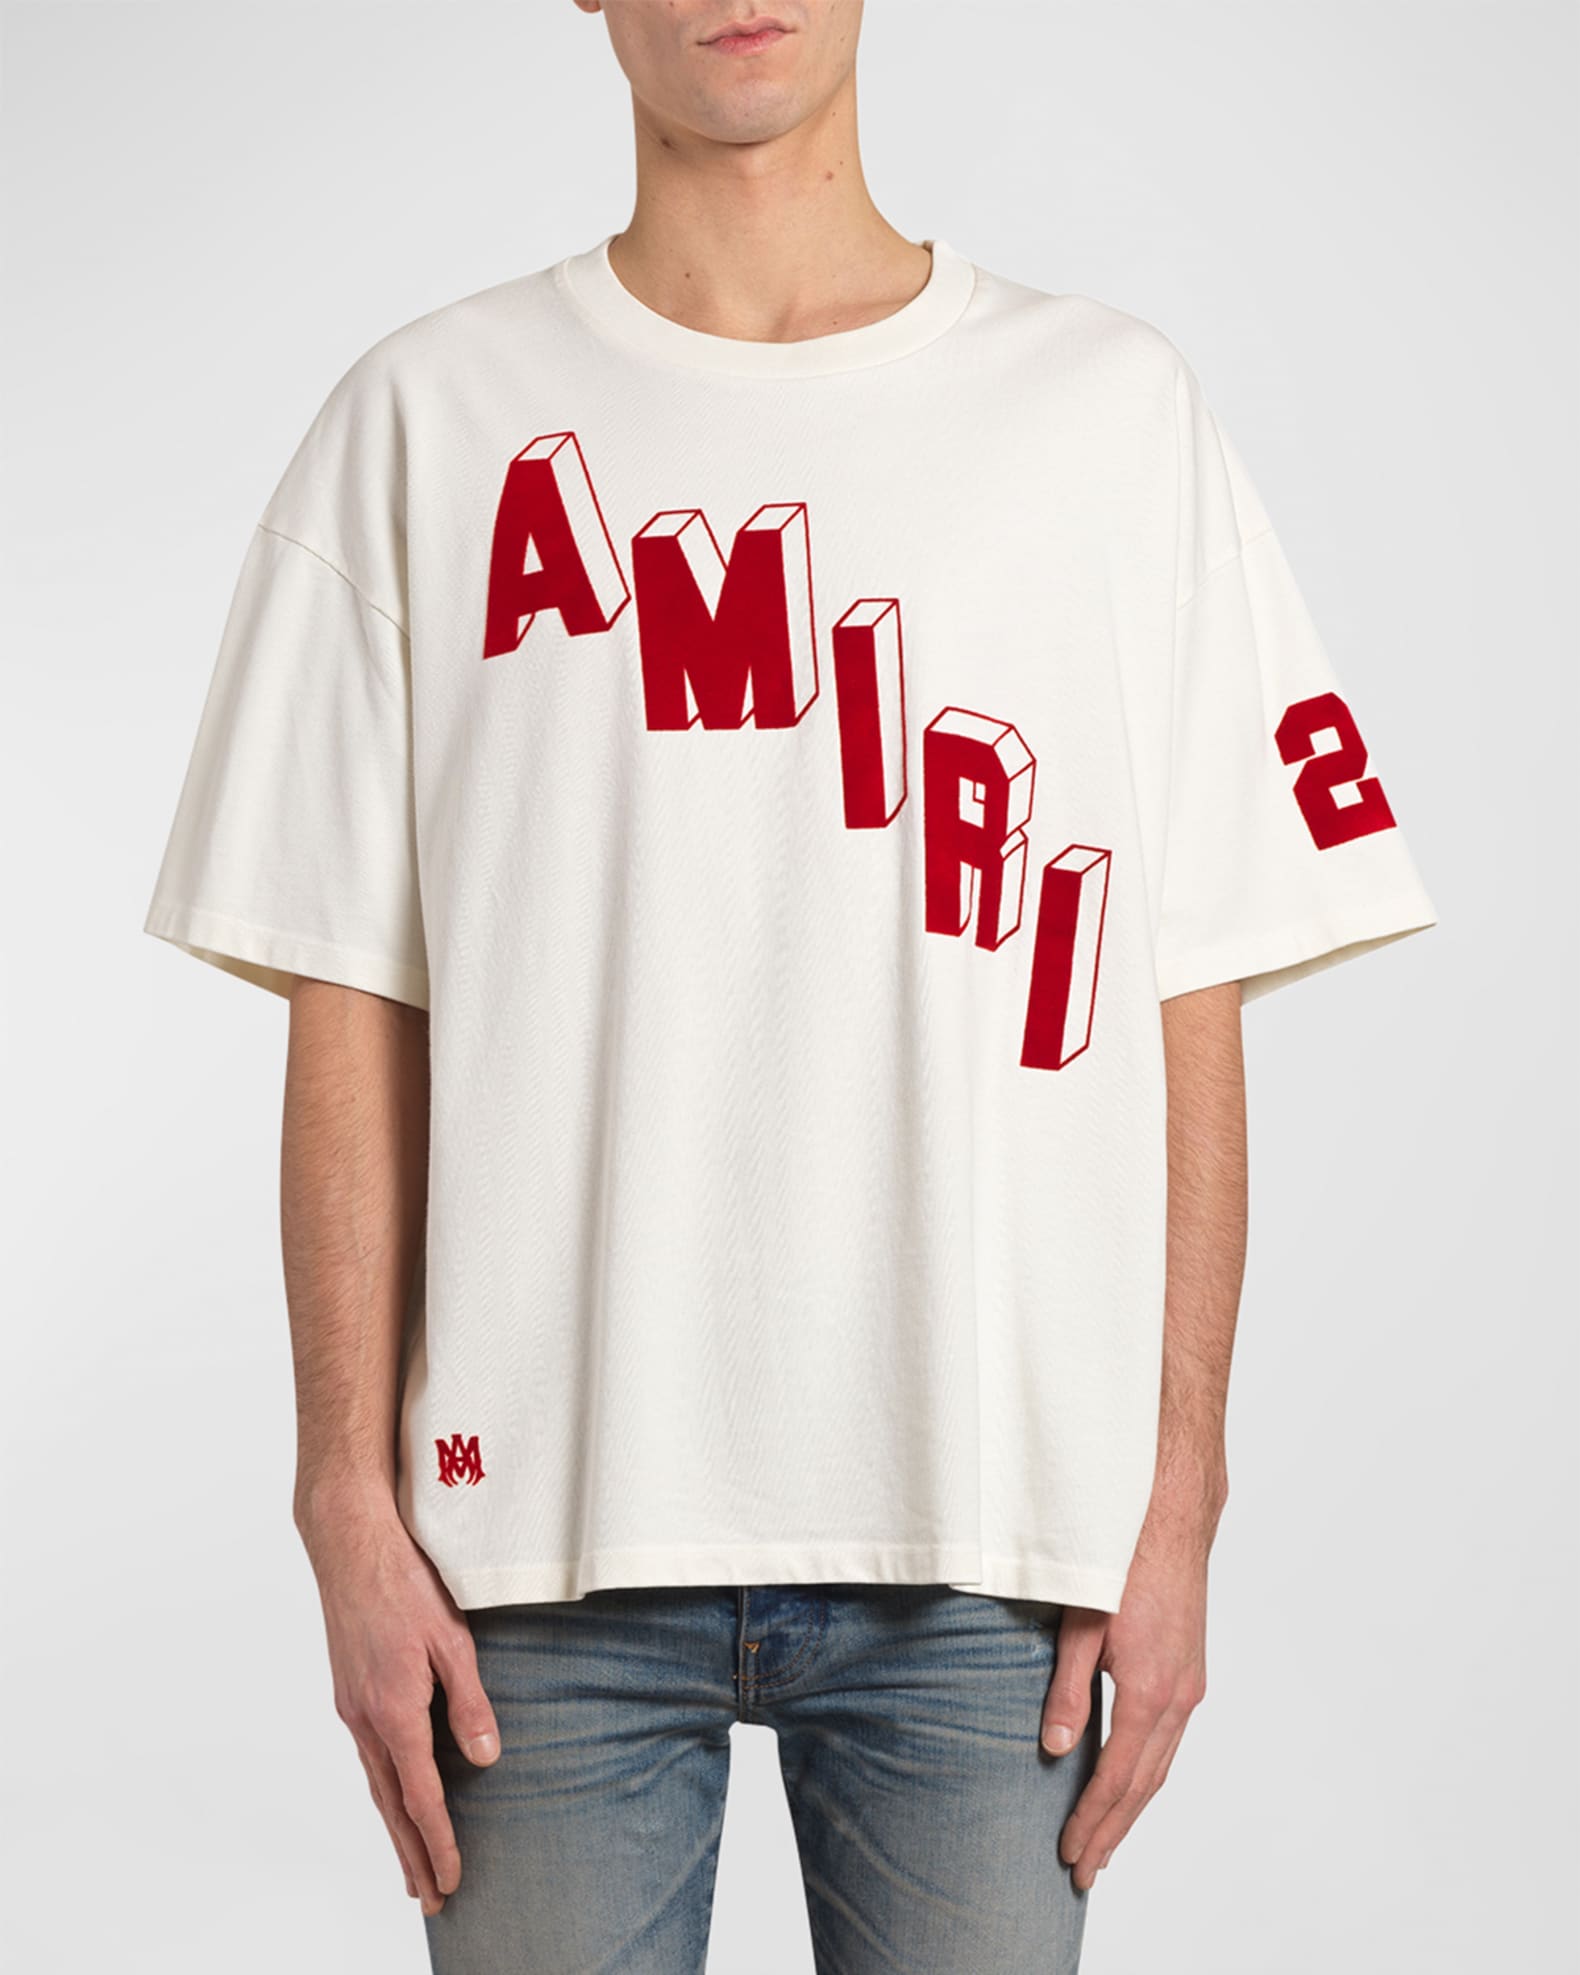 Amiri Men's Logo T-Shirt